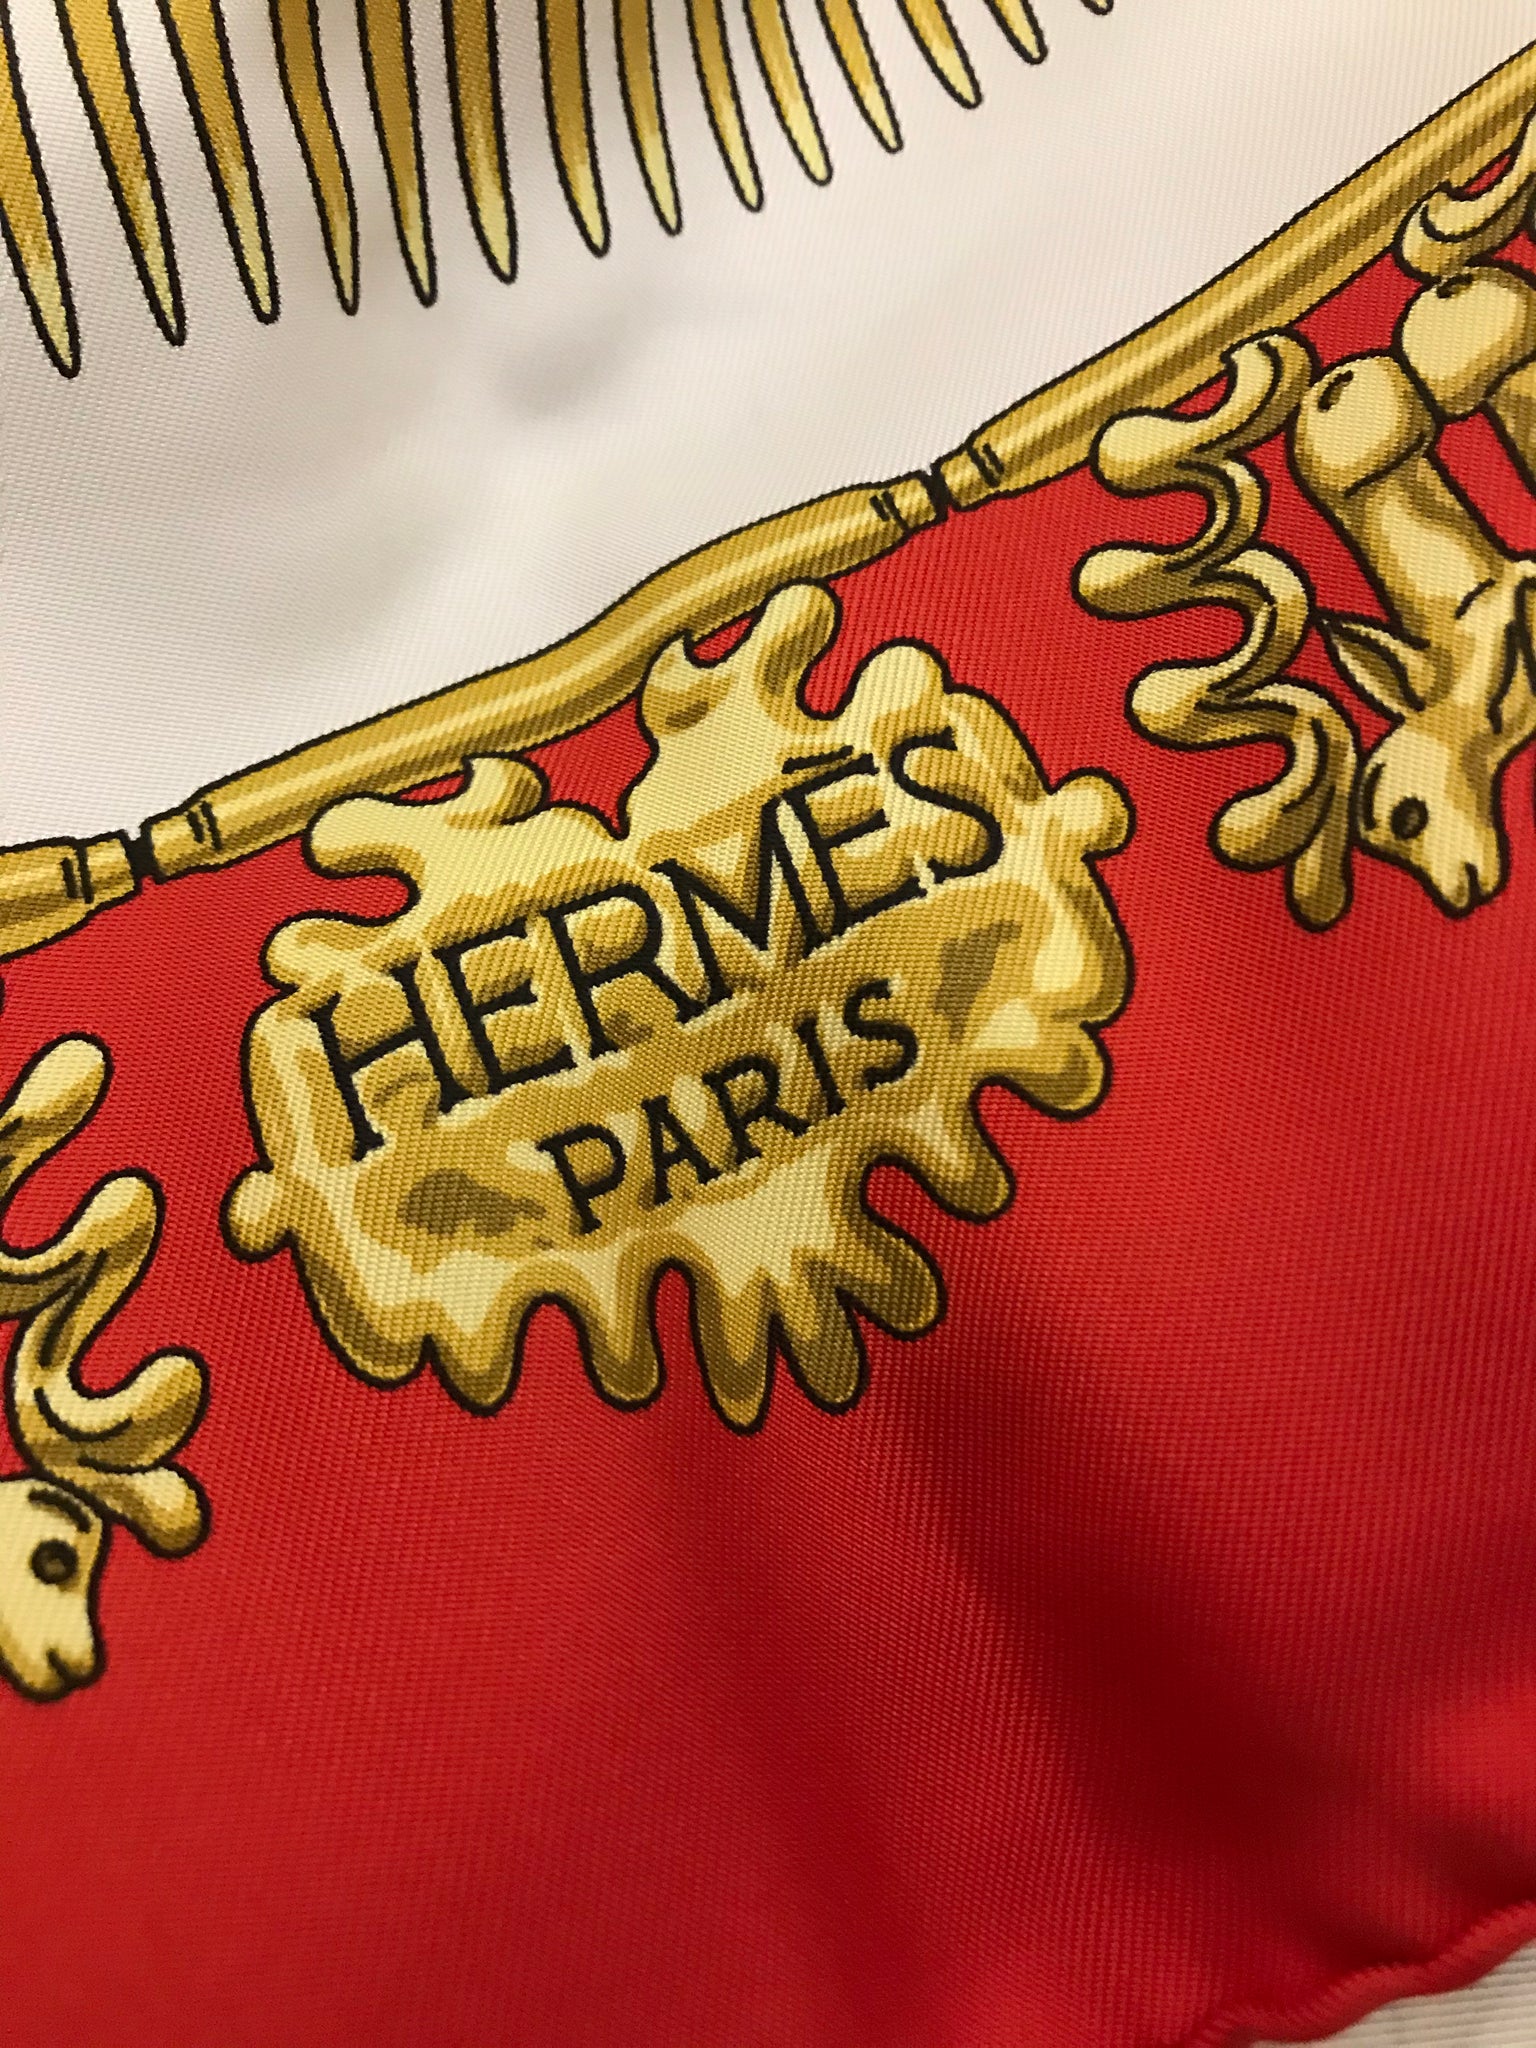 Isabella's Wardrobe Hermes Les Cavaliers D'or Silk Scarf.